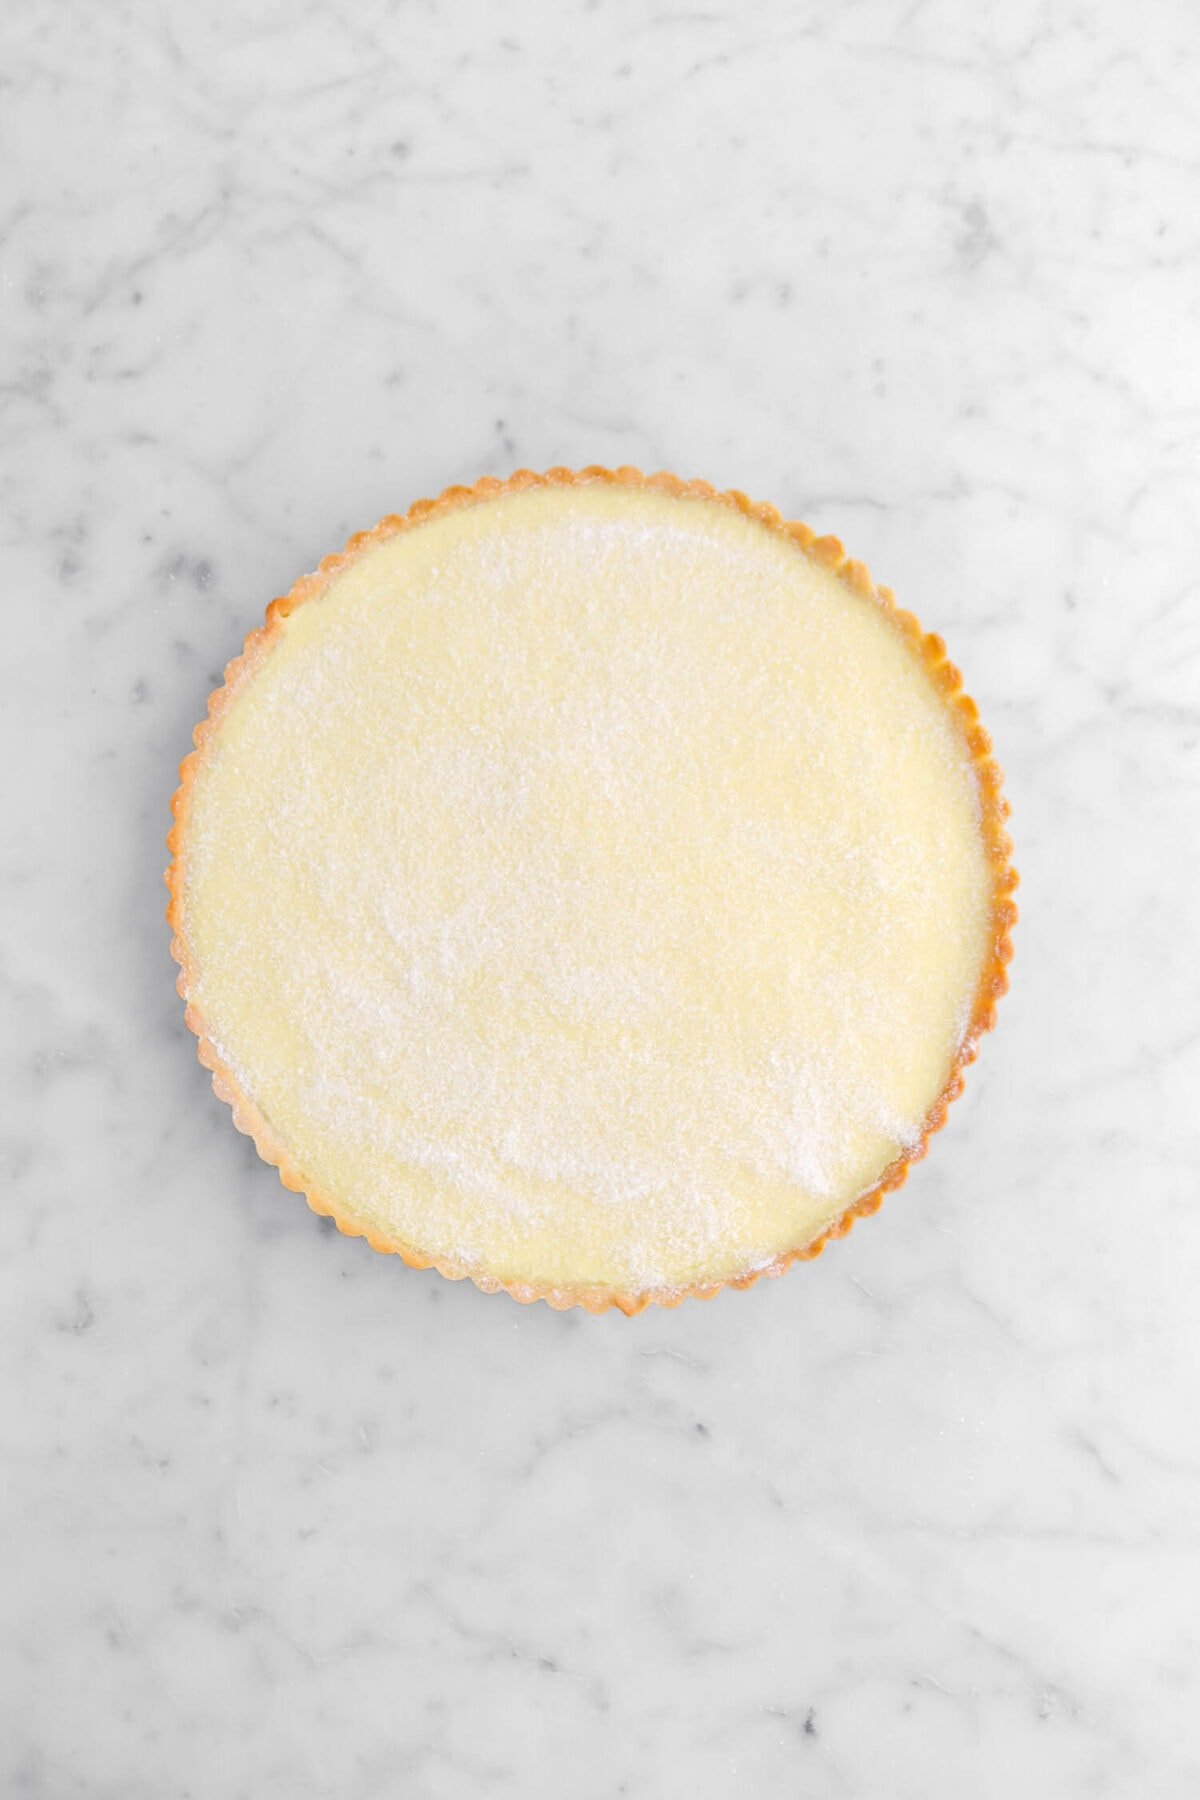 granulated sugar coating top of custard in tart shell.